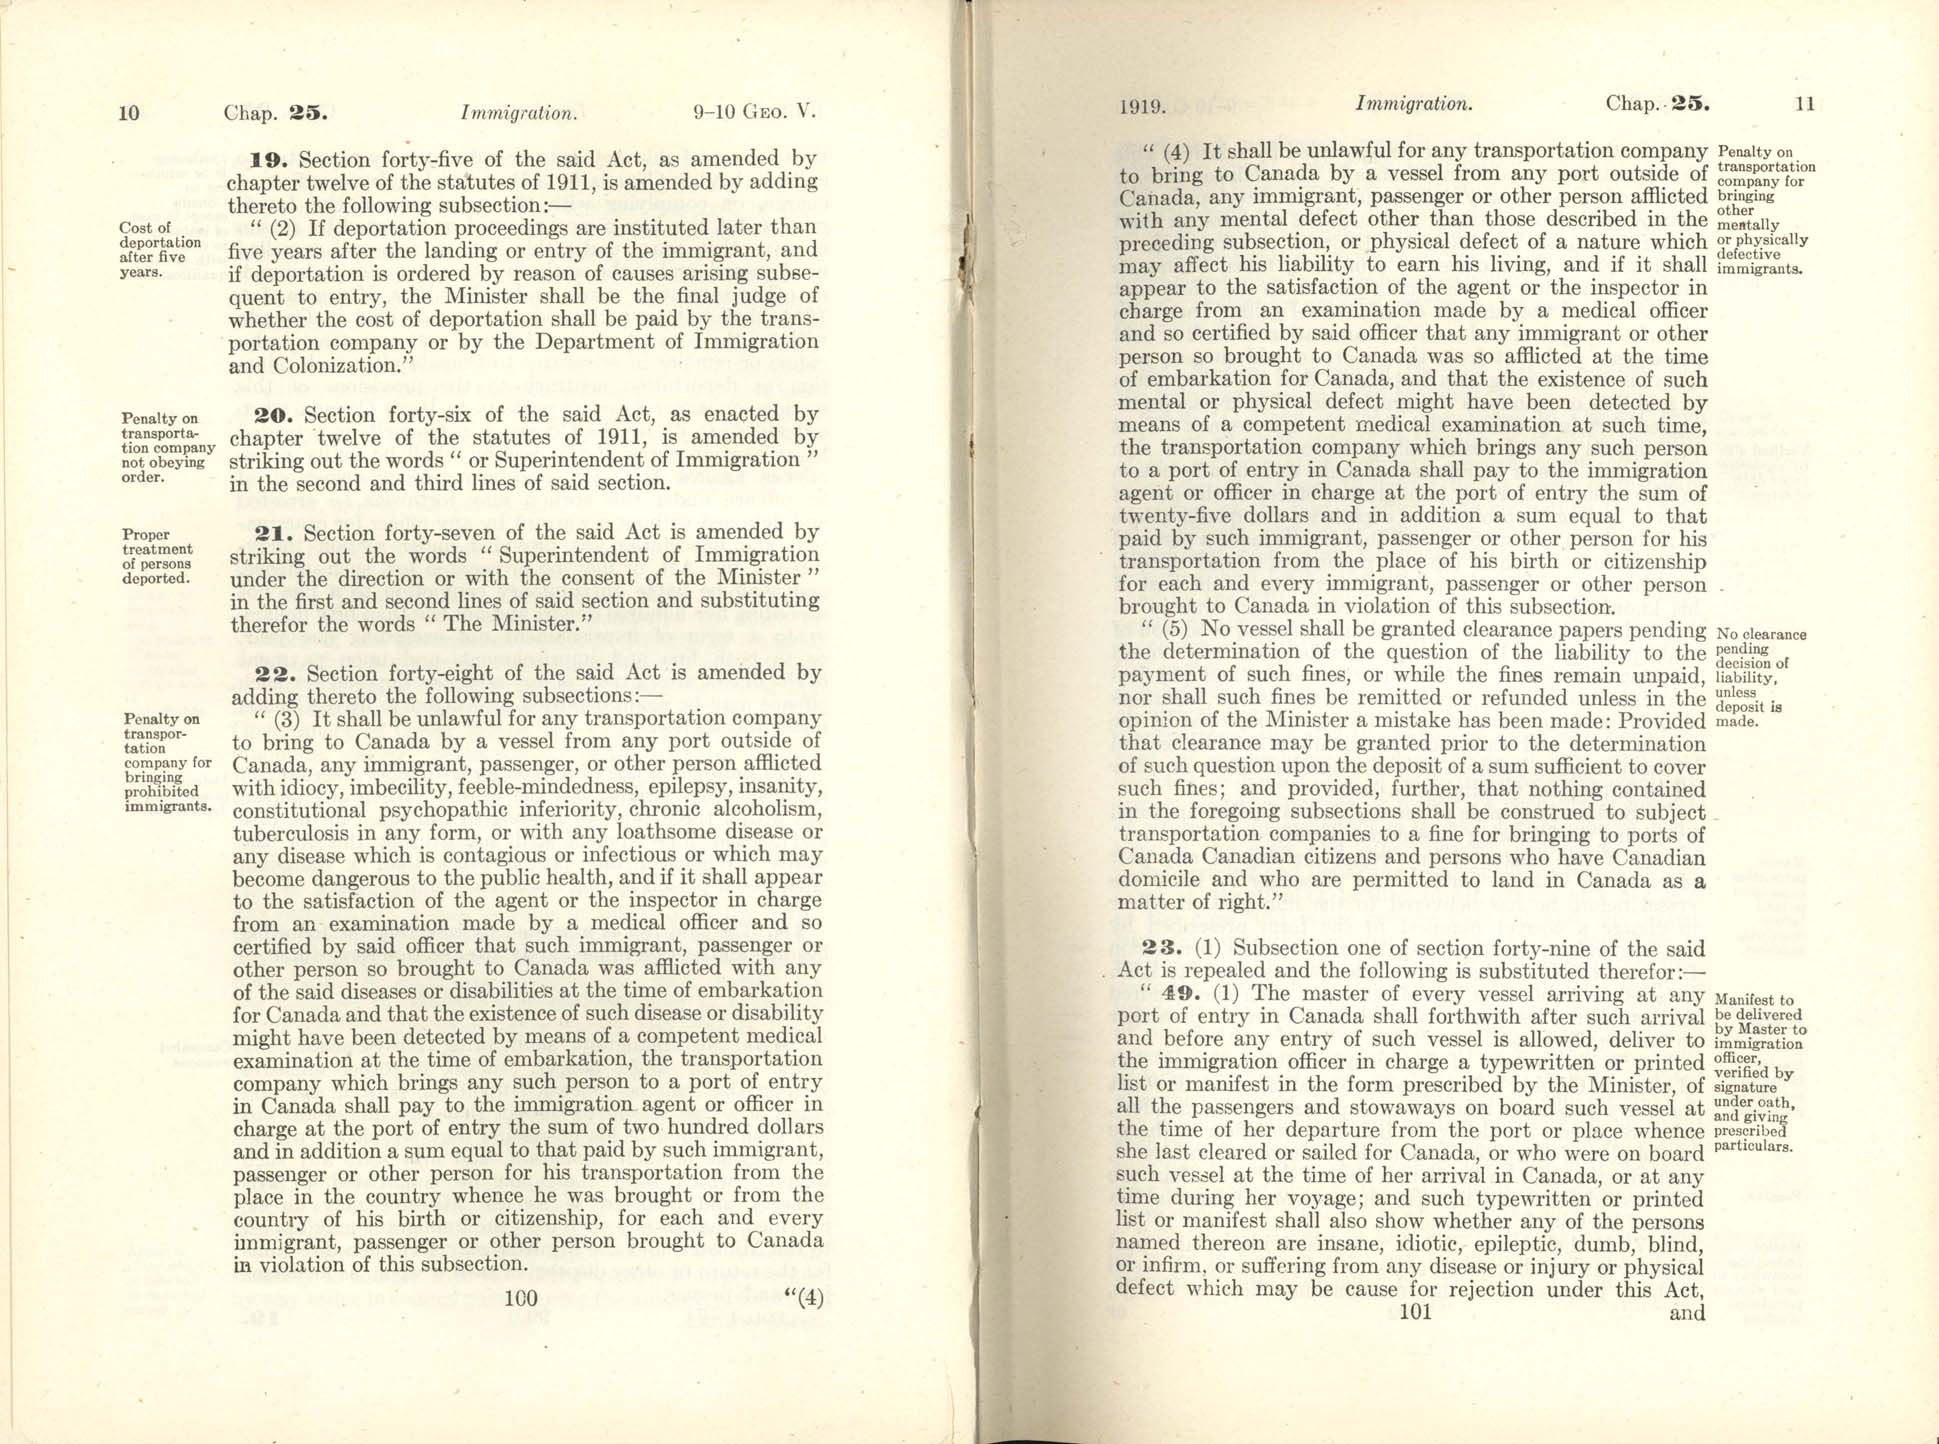 Page 100, 101 Immigration Act Amendment, 1919